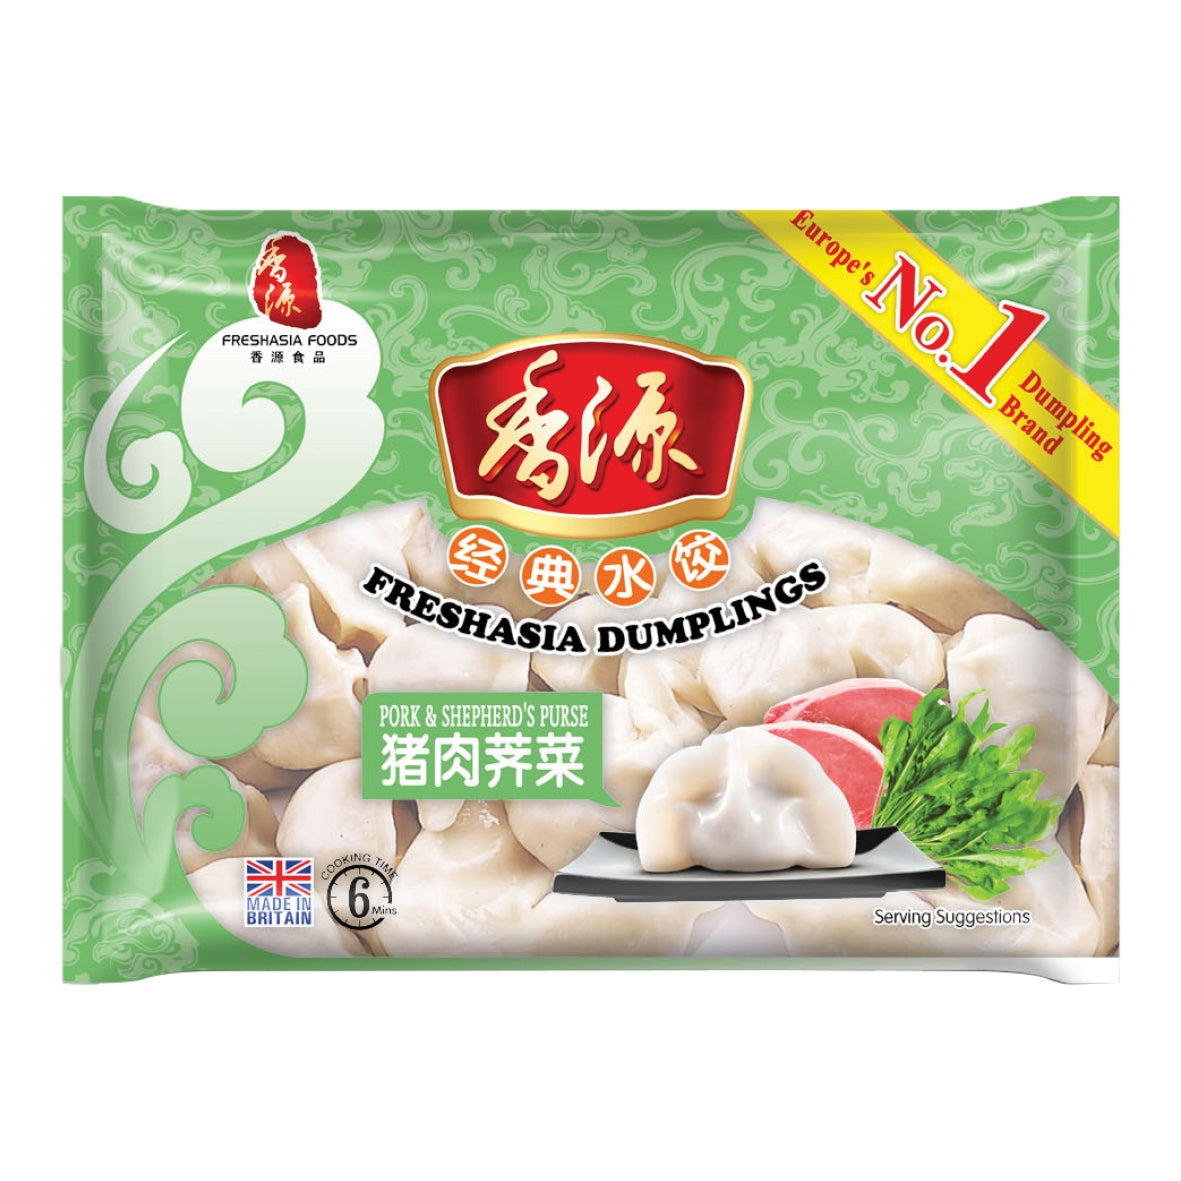 Fresh Asia Pork and Shepherds Purse Dumplings 400g